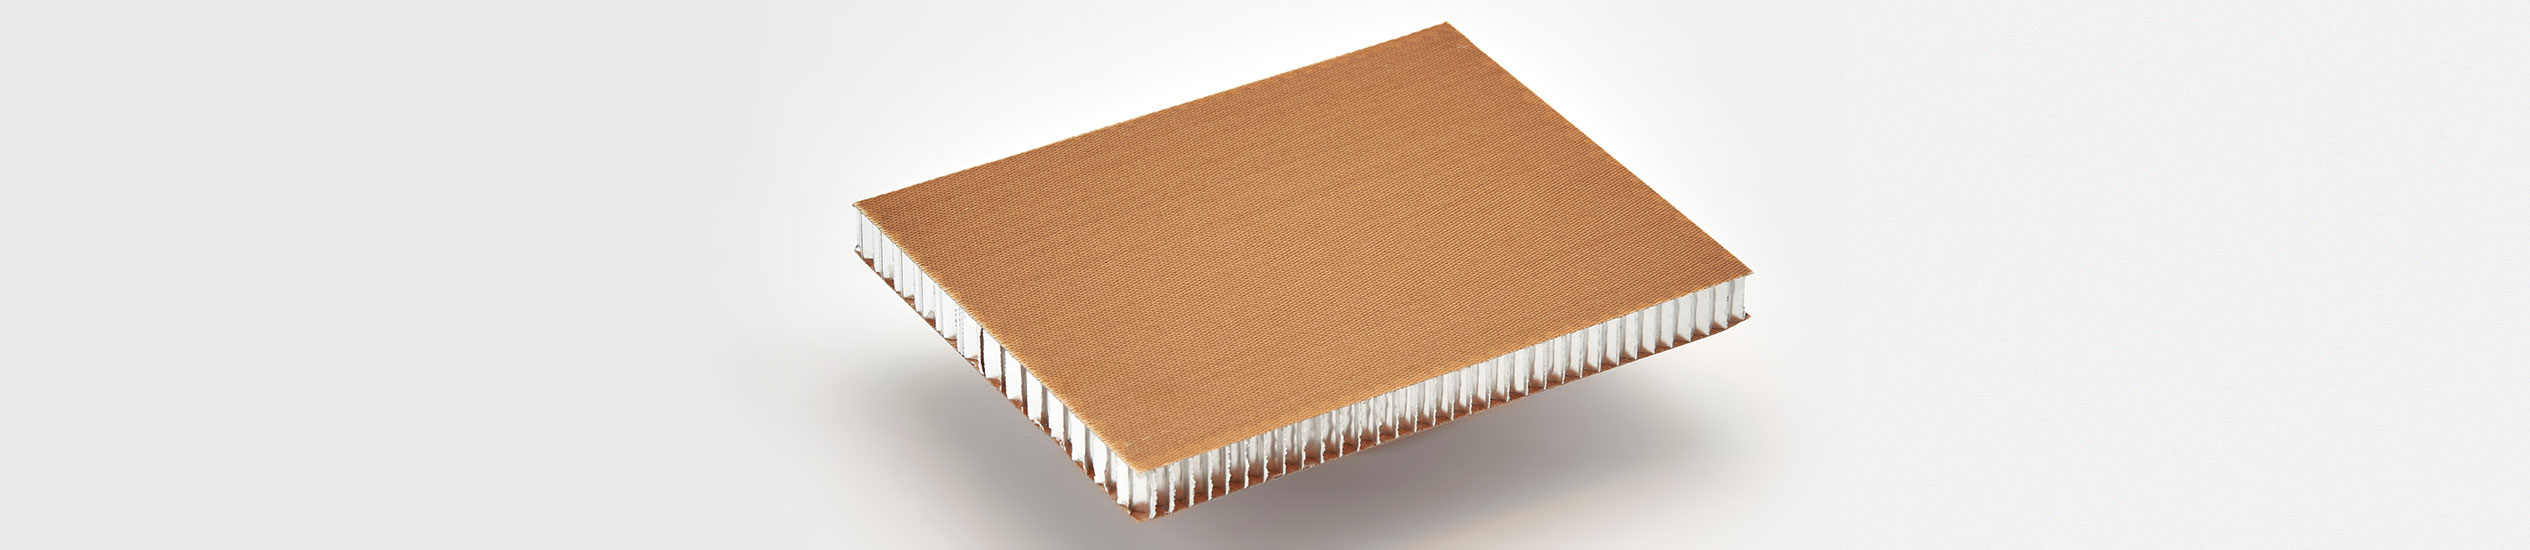 ALUSTEP ® F es un panel sándwich con un núcleo en nido de abeja (Honeycomb) de aluminio y fibra de vidrio impregnadas de resina fenólica.